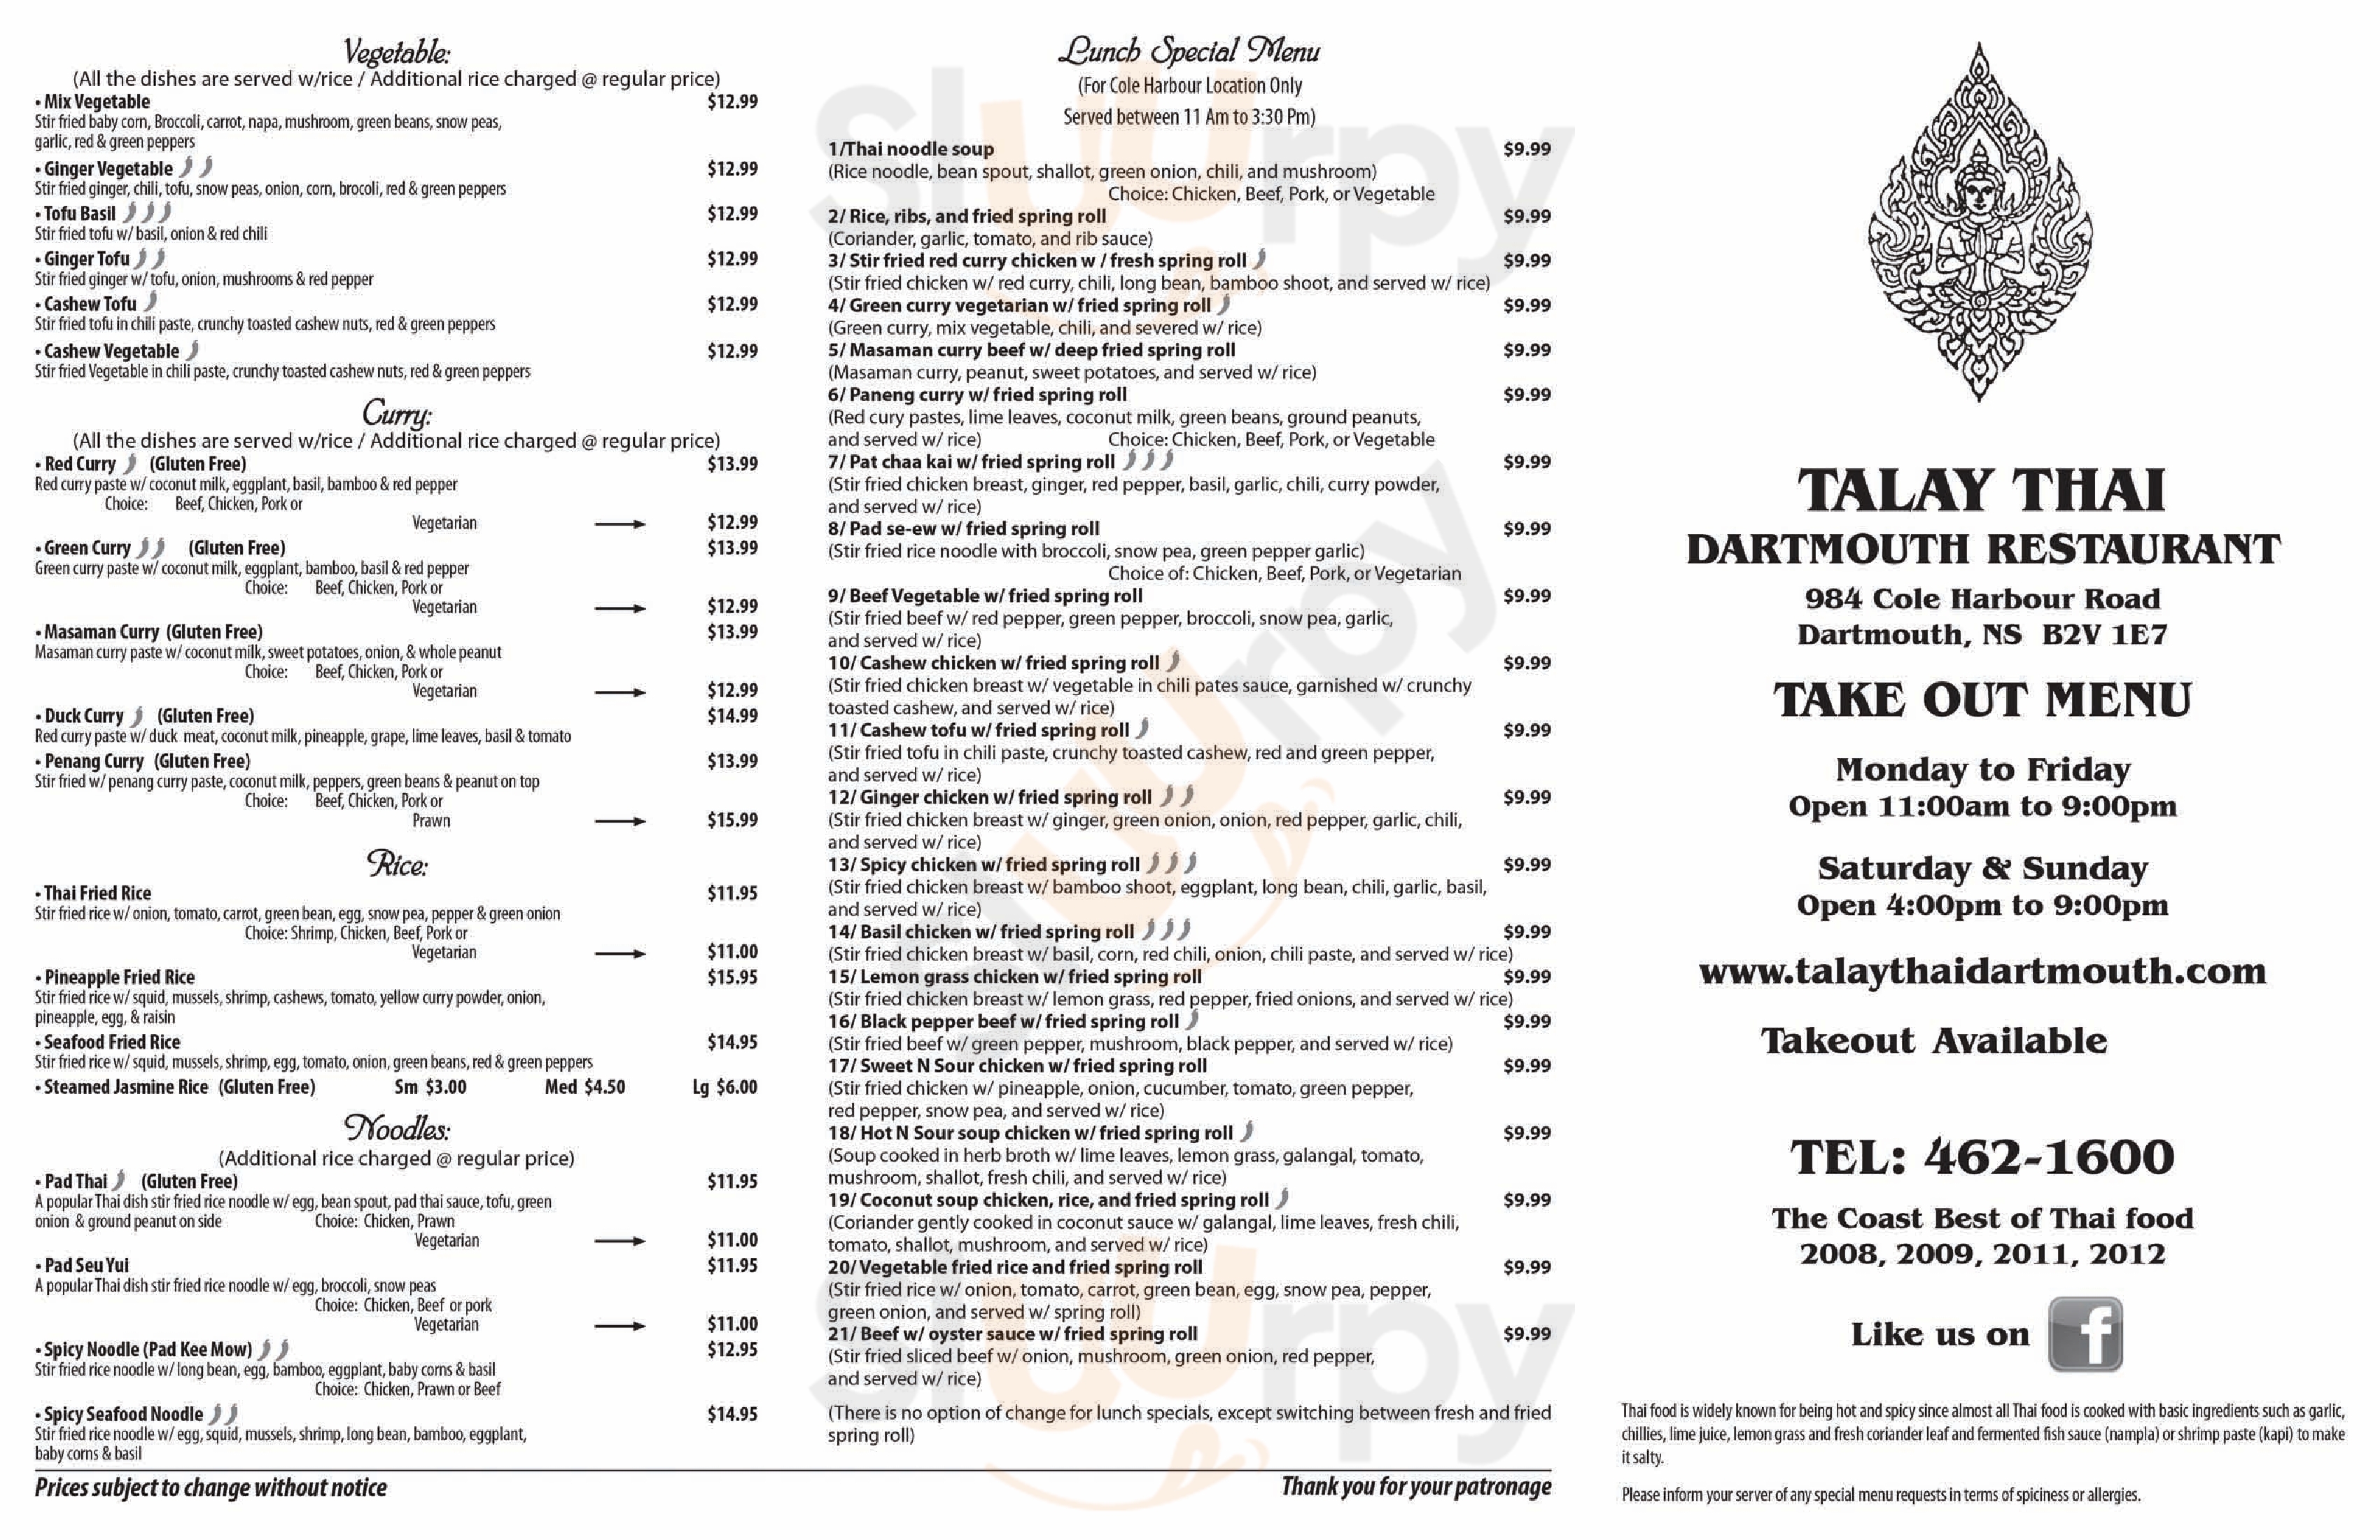 Talay Thai Dartmouth Restaurant Dartmouth Menu - 1